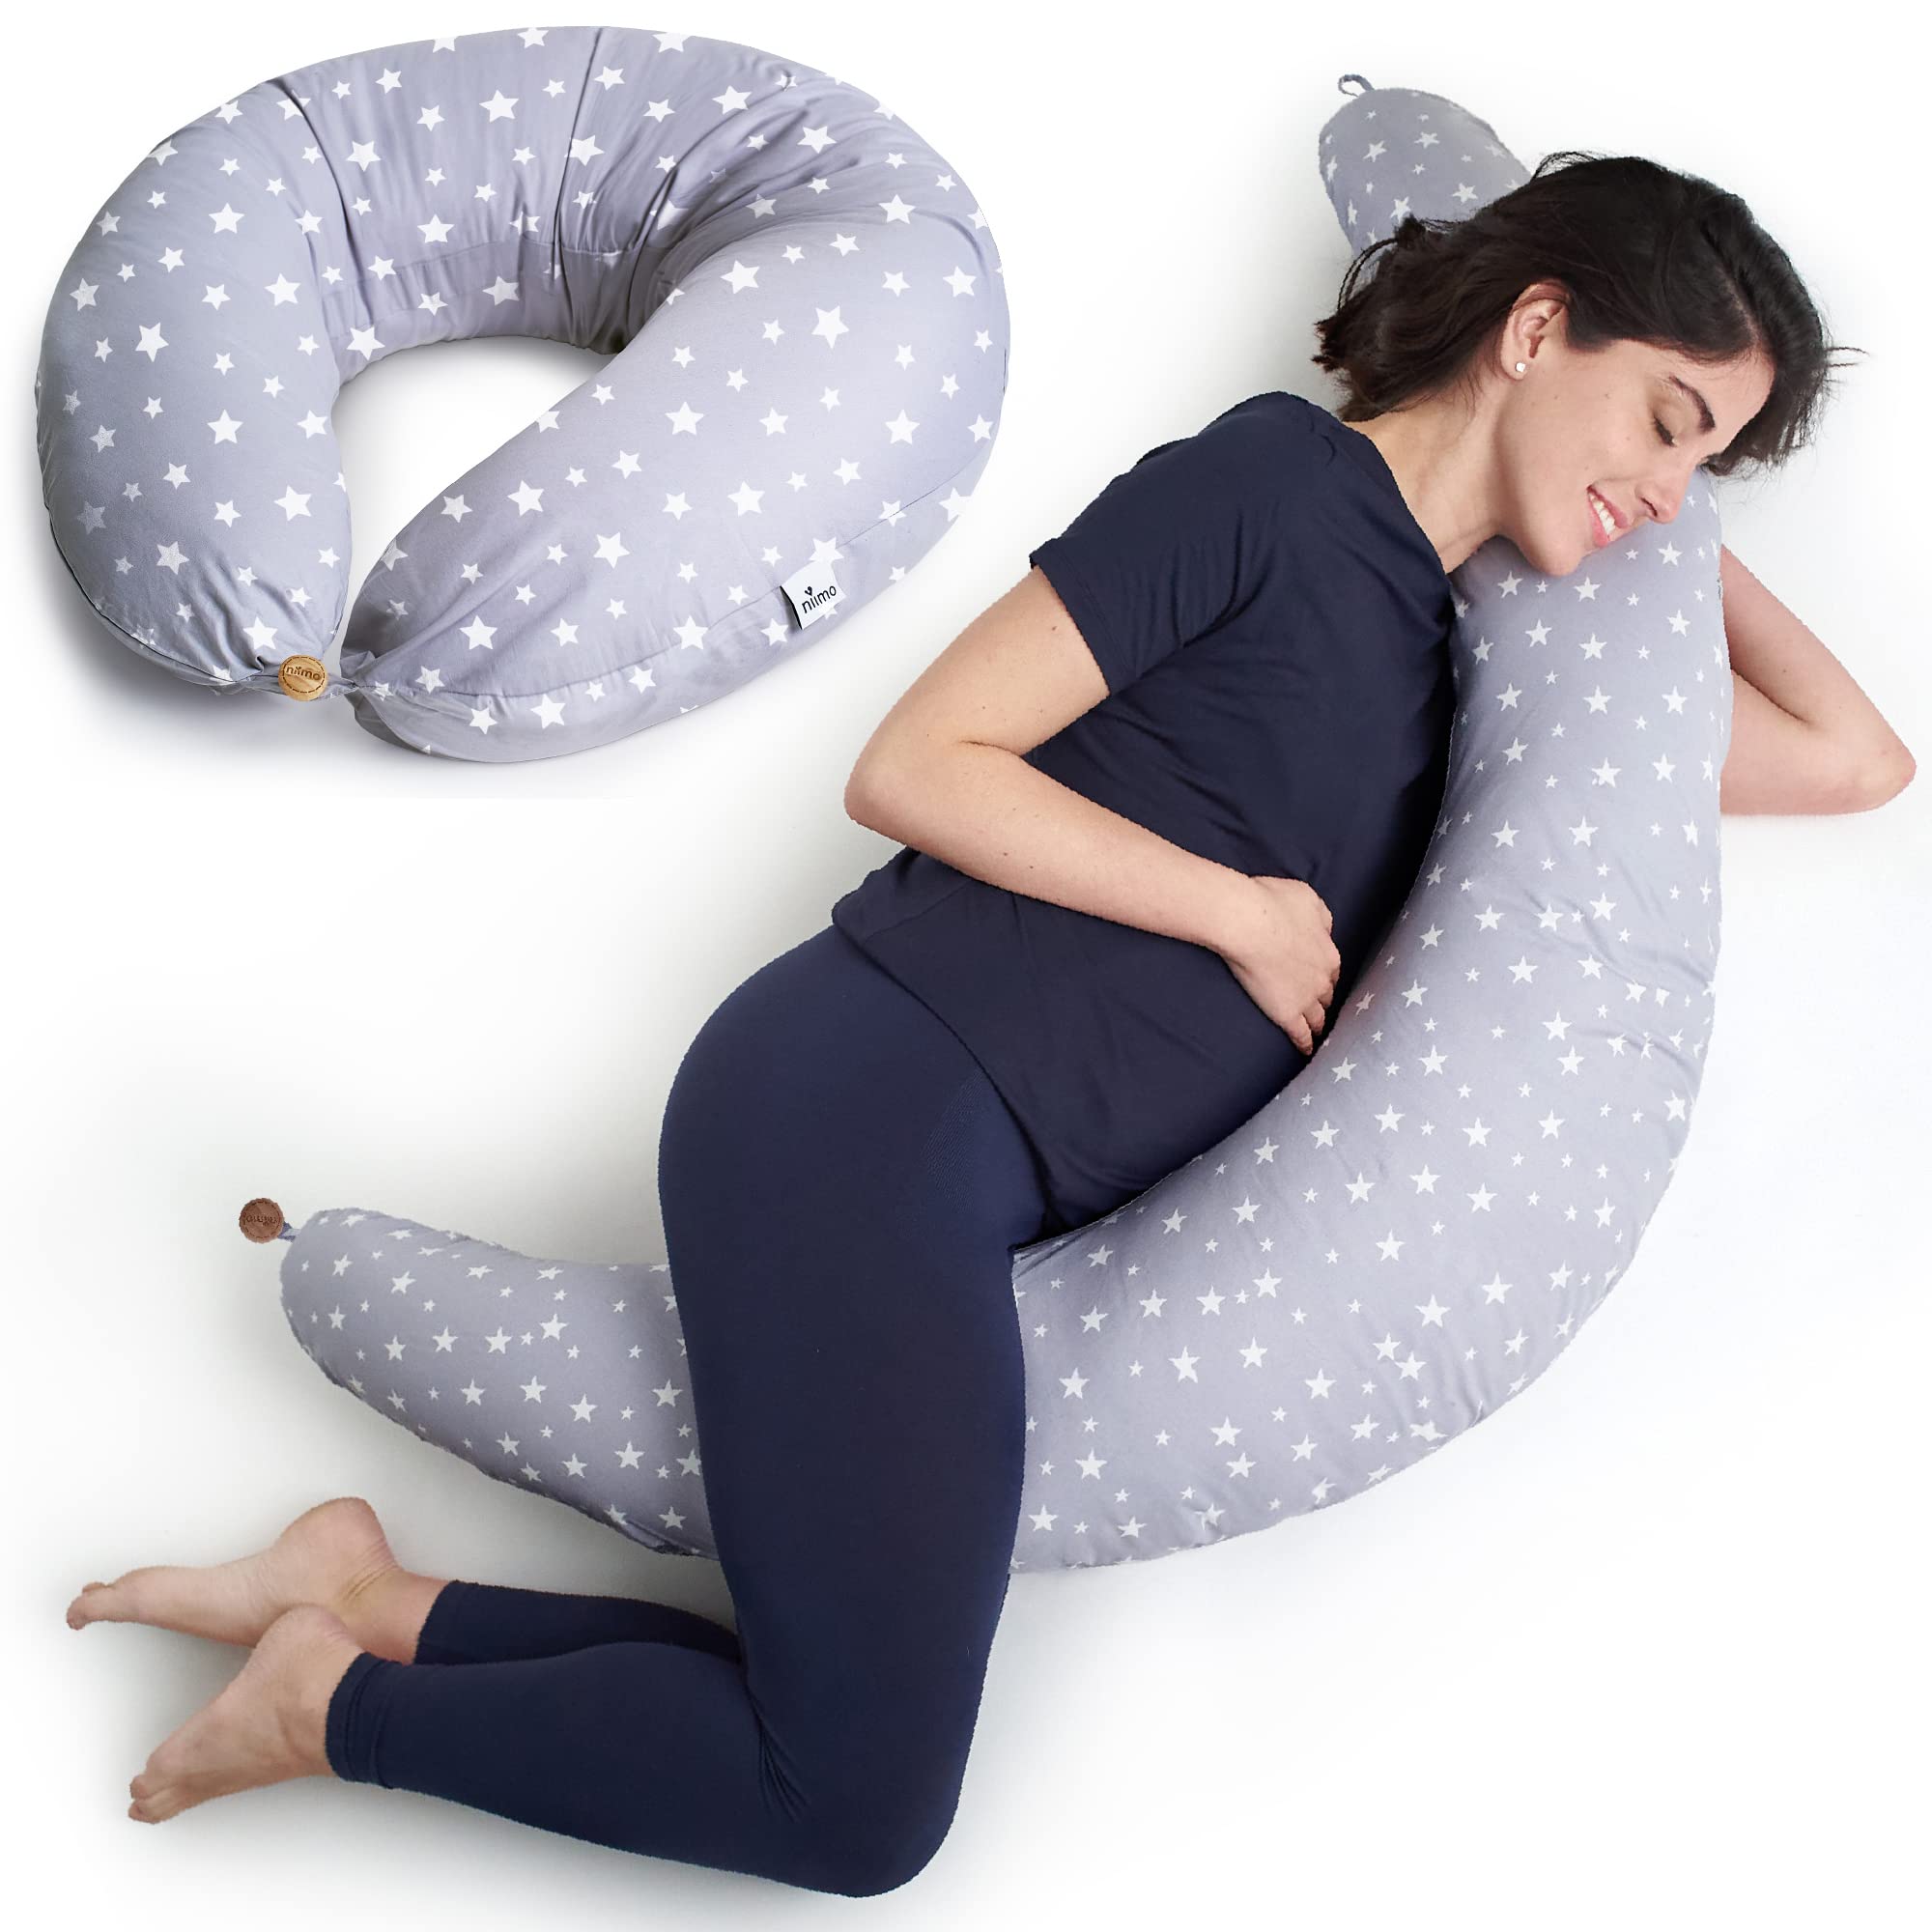 Niimo Pregnancy Pillow